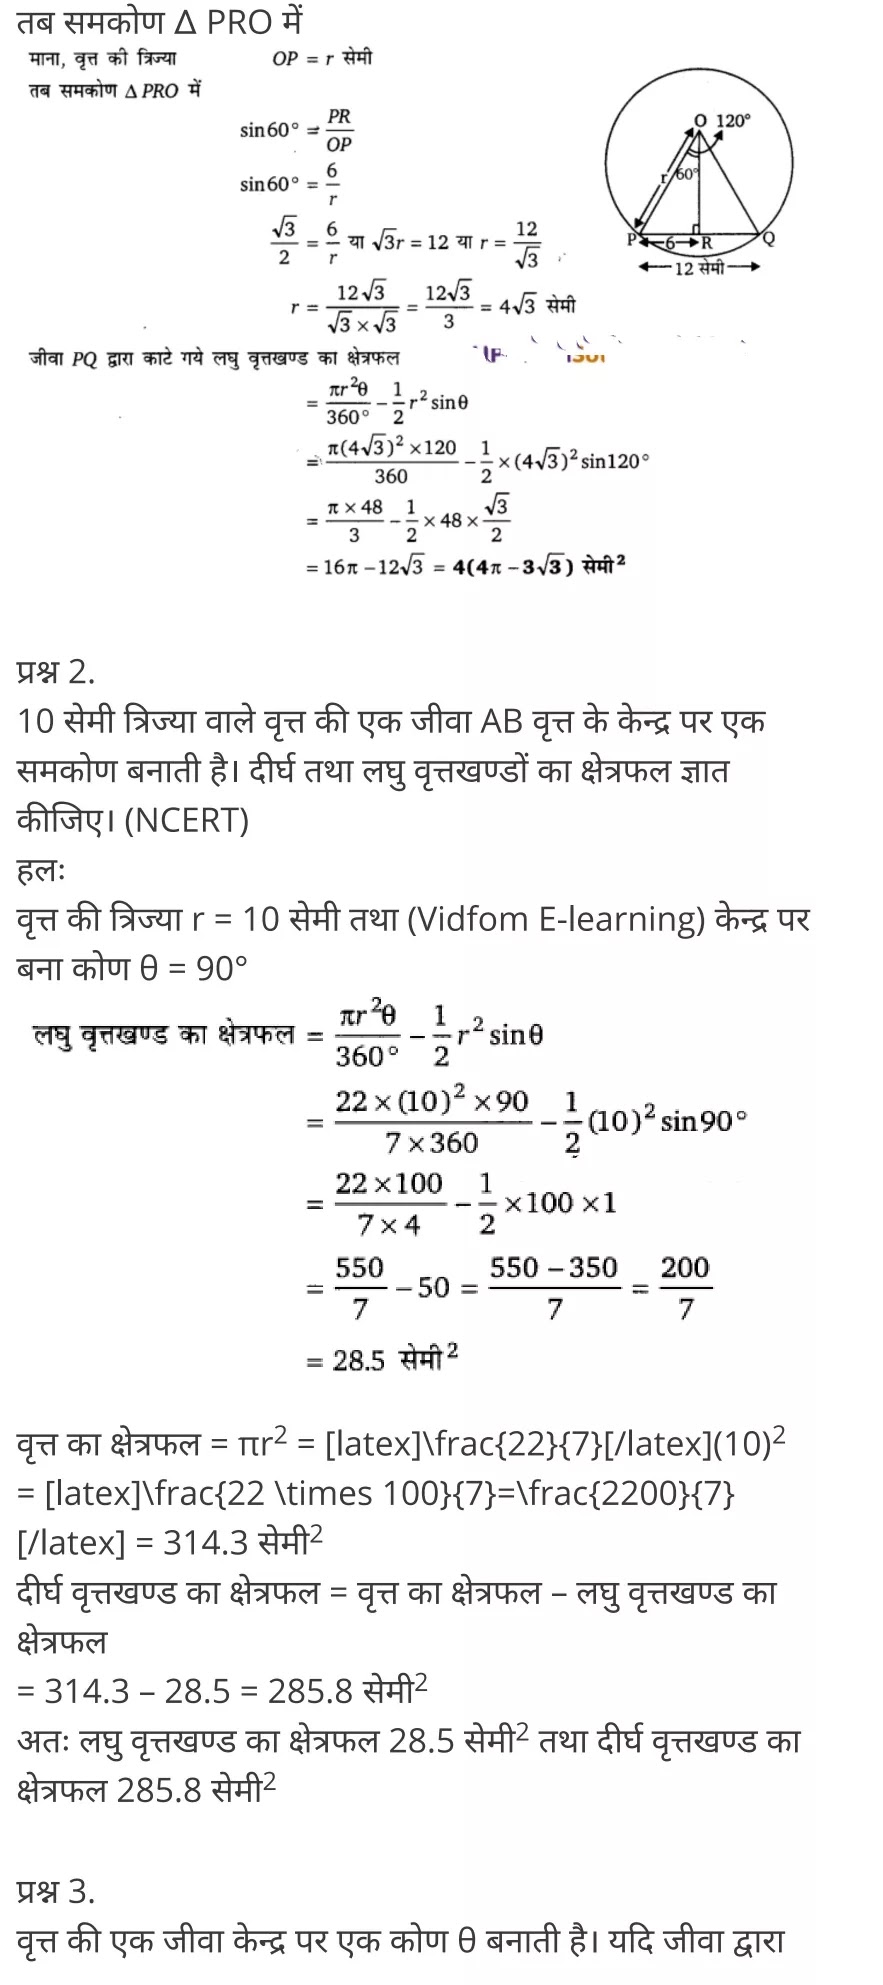 Chapter 12 Area Related to Circles Ex 12.1, Chapter 12 Area Related to Circles Ex 12.2, Chapter 12 Area Related to Circles Ex 12.3, Chapter 12 Area Related to Circles Ex 12.4, कक्षा 10 बालाजी गणित  के नोट्स  हिंदी में एनसीईआरटी समाधान,     class 10 Balaji Maths Chapter 12,   class 10 Balaji Maths Chapter 12 ncert solutions in Hindi,   class 10 Balaji Maths Chapter 12 notes in hindi,   class 10 Balaji Maths Chapter 12 question answer,   class 10 Balaji Maths Chapter 12 notes,   class 10 Balaji Maths Chapter 12 class 10 Balaji Maths Chapter 12 in  hindi,    class 10 Balaji Maths Chapter 12 important questions in  hindi,   class 10 Balaji Maths Chapter 12 notes in hindi,    class 10 Balaji Maths Chapter 12 test,   class 10 Balaji Maths Chapter 12 pdf,   class 10 Balaji Maths Chapter 12 notes pdf,   class 10 Balaji Maths Chapter 12 exercise solutions,   class 10 Balaji Maths Chapter 12 notes study rankers,   class 10 Balaji Maths Chapter 12 notes,    class 10 Balaji Maths Chapter 12  class 10  notes pdf,   class 10 Balaji Maths Chapter 12 class 10  notes  ncert,   class 10 Balaji Maths Chapter 12 class 10 pdf,   class 10 Balaji Maths Chapter 12  book,   class 10 Balaji Maths Chapter 12 quiz class 10  ,    10  th class 10 Balaji Maths Chapter 12  book up board,   up board 10  th class 10 Balaji Maths Chapter 12 notes,  class 10 Balaji Maths,   class 10 Balaji Maths ncert solutions in Hindi,   class 10 Balaji Maths notes in hindi,   class 10 Balaji Maths question answer,   class 10 Balaji Maths notes,  class 10 Balaji Maths class 10 Balaji Maths Chapter 12 in  hindi,    class 10 Balaji Maths important questions in  hindi,   class 10 Balaji Maths notes in hindi,    class 10 Balaji Maths test,  class 10 Balaji Maths class 10 Balaji Maths Chapter 12 pdf,   class 10 Balaji Maths notes pdf,   class 10 Balaji Maths exercise solutions,   class 10 Balaji Maths,  class 10 Balaji Maths notes study rankers,   class 10 Balaji Maths notes,  class 10 Balaji Maths notes,   class 10 Balaji Maths  class 10  notes pdf,   class 10 Balaji Maths class 10  notes  ncert,   class 10 Balaji Maths class 10 pdf,   class 10 Balaji Maths  book,  class 10 Balaji Maths quiz class 10  ,  10  th class 10 Balaji Maths    book up board,    up board 10  th class 10 Balaji Maths notes,      कक्षा 10 बालाजी गणित अध्याय 12 ,  कक्षा 10 बालाजी गणित, कक्षा 10 बालाजी गणित अध्याय 12  के नोट्स हिंदी में,  कक्षा 10 का हिंदी अध्याय 12 का प्रश्न उत्तर,  कक्षा 10 बालाजी गणित अध्याय 12  के नोट्स,  10 कक्षा बालाजी गणित  हिंदी में, कक्षा 10 बालाजी गणित अध्याय 12  हिंदी में,  कक्षा 10 बालाजी गणित अध्याय 12  महत्वपूर्ण प्रश्न हिंदी में, कक्षा 10   हिंदी के नोट्स  हिंदी में, बालाजी गणित हिंदी में  कक्षा 10 नोट्स pdf,    बालाजी गणित हिंदी में  कक्षा 10 नोट्स 2021 ncert,   बालाजी गणित हिंदी  कक्षा 10 pdf,   बालाजी गणित हिंदी में  पुस्तक,   बालाजी गणित हिंदी में की बुक,   बालाजी गणित हिंदी में  प्रश्नोत्तरी class 10 ,  बिहार बोर्ड 10  पुस्तक वीं हिंदी नोट्स,    बालाजी गणित कक्षा 10 नोट्स 2021 ncert,   बालाजी गणित  कक्षा 10 pdf,   बालाजी गणित  पुस्तक,   बालाजी गणित  प्रश्नोत्तरी class 10, कक्षा 10 बालाजी गणित,  कक्षा 10 बालाजी गणित  के नोट्स हिंदी में,  कक्षा 10 का हिंदी का प्रश्न उत्तर,  कक्षा 10 बालाजी गणित  के नोट्स,  10 कक्षा हिंदी 2021  हिंदी में, कक्षा 10 बालाजी गणित  हिंदी में,  कक्षा 10 बालाजी गणित  महत्वपूर्ण प्रश्न हिंदी में, कक्षा 10 बालाजी गणित  नोट्स  हिंदी में,